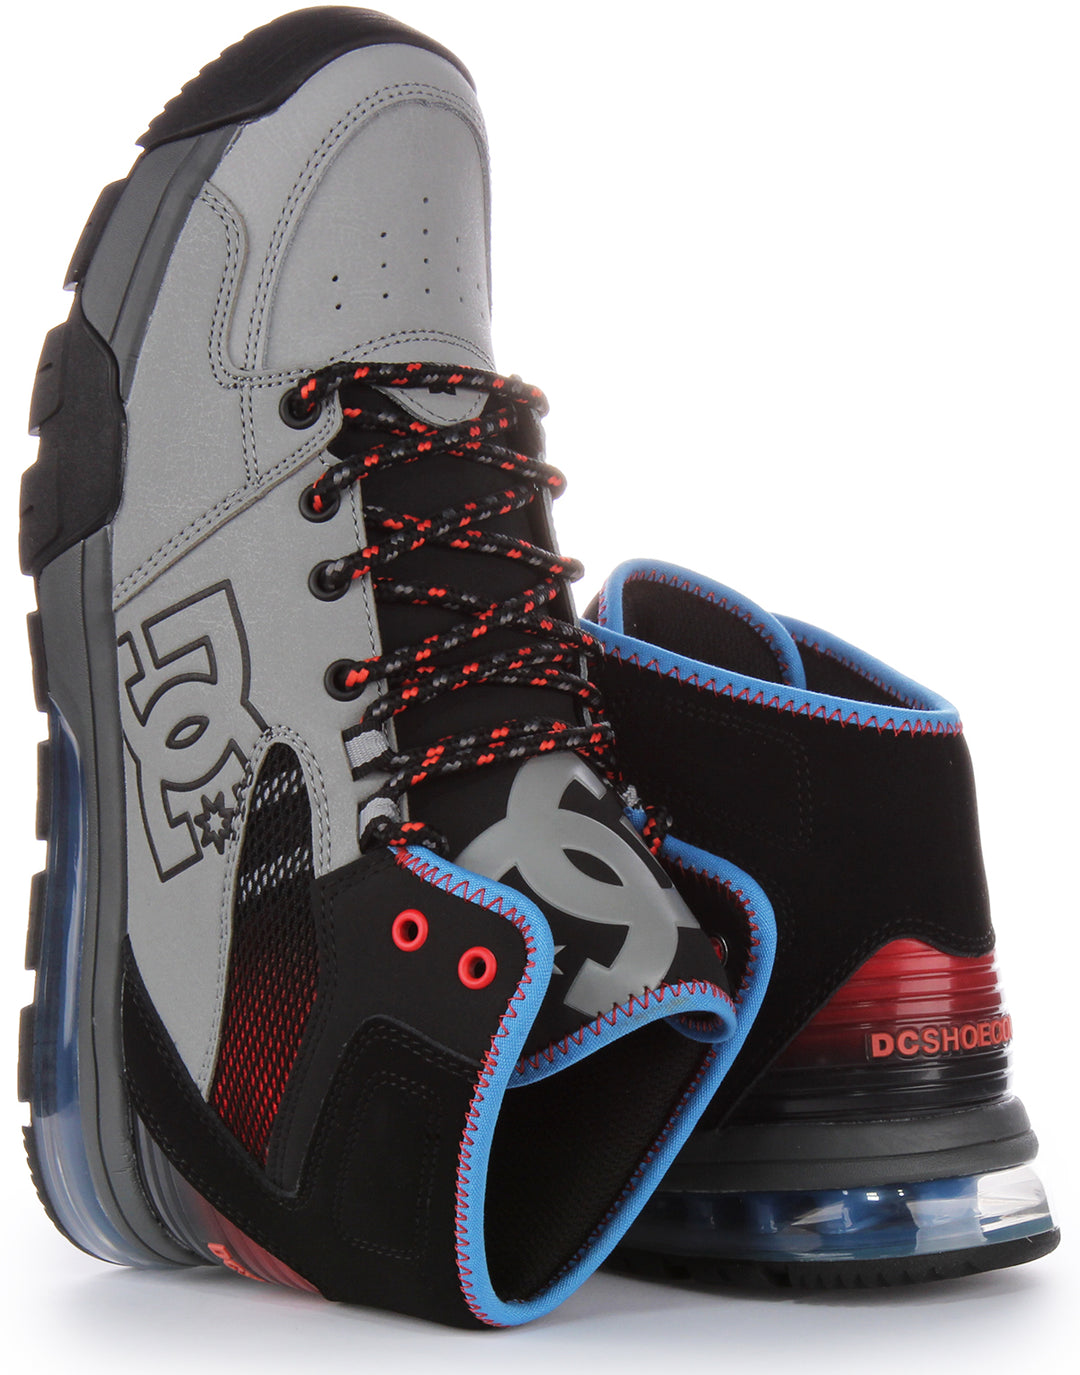 DC Shoes Versatile Hi WR Schnürung Wasserdicht Leder Turnschuhe Grau Blau